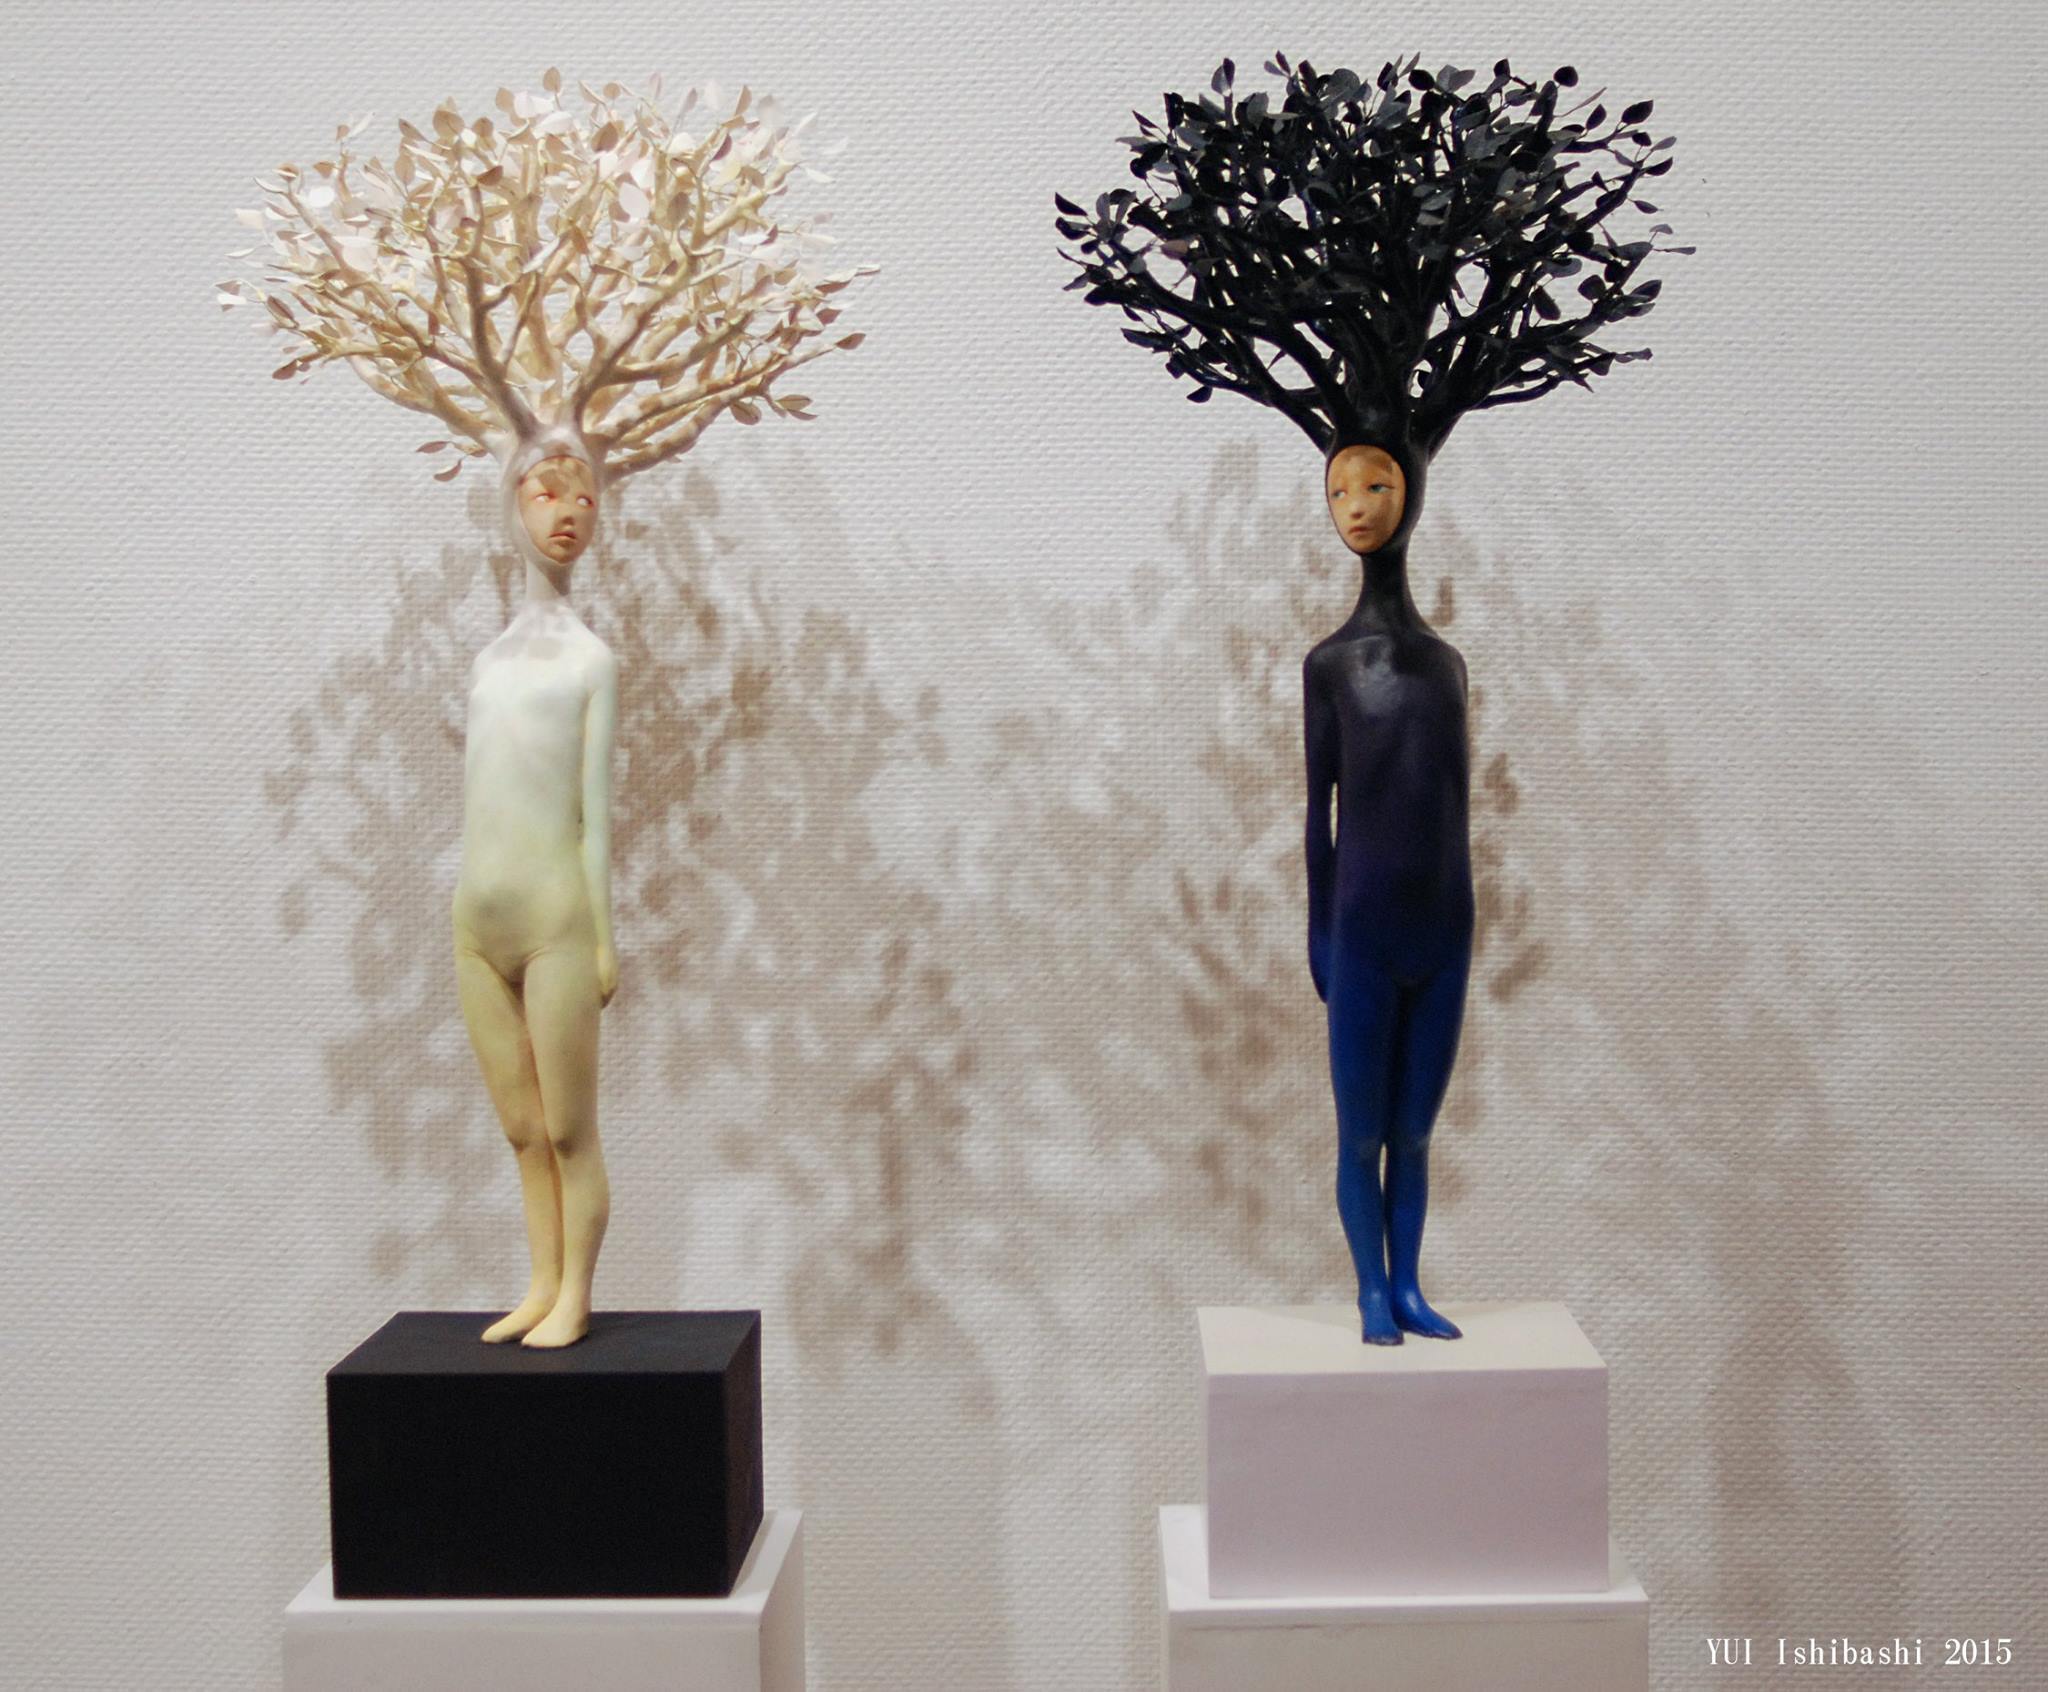 Ishibashi Yui – Sculptures